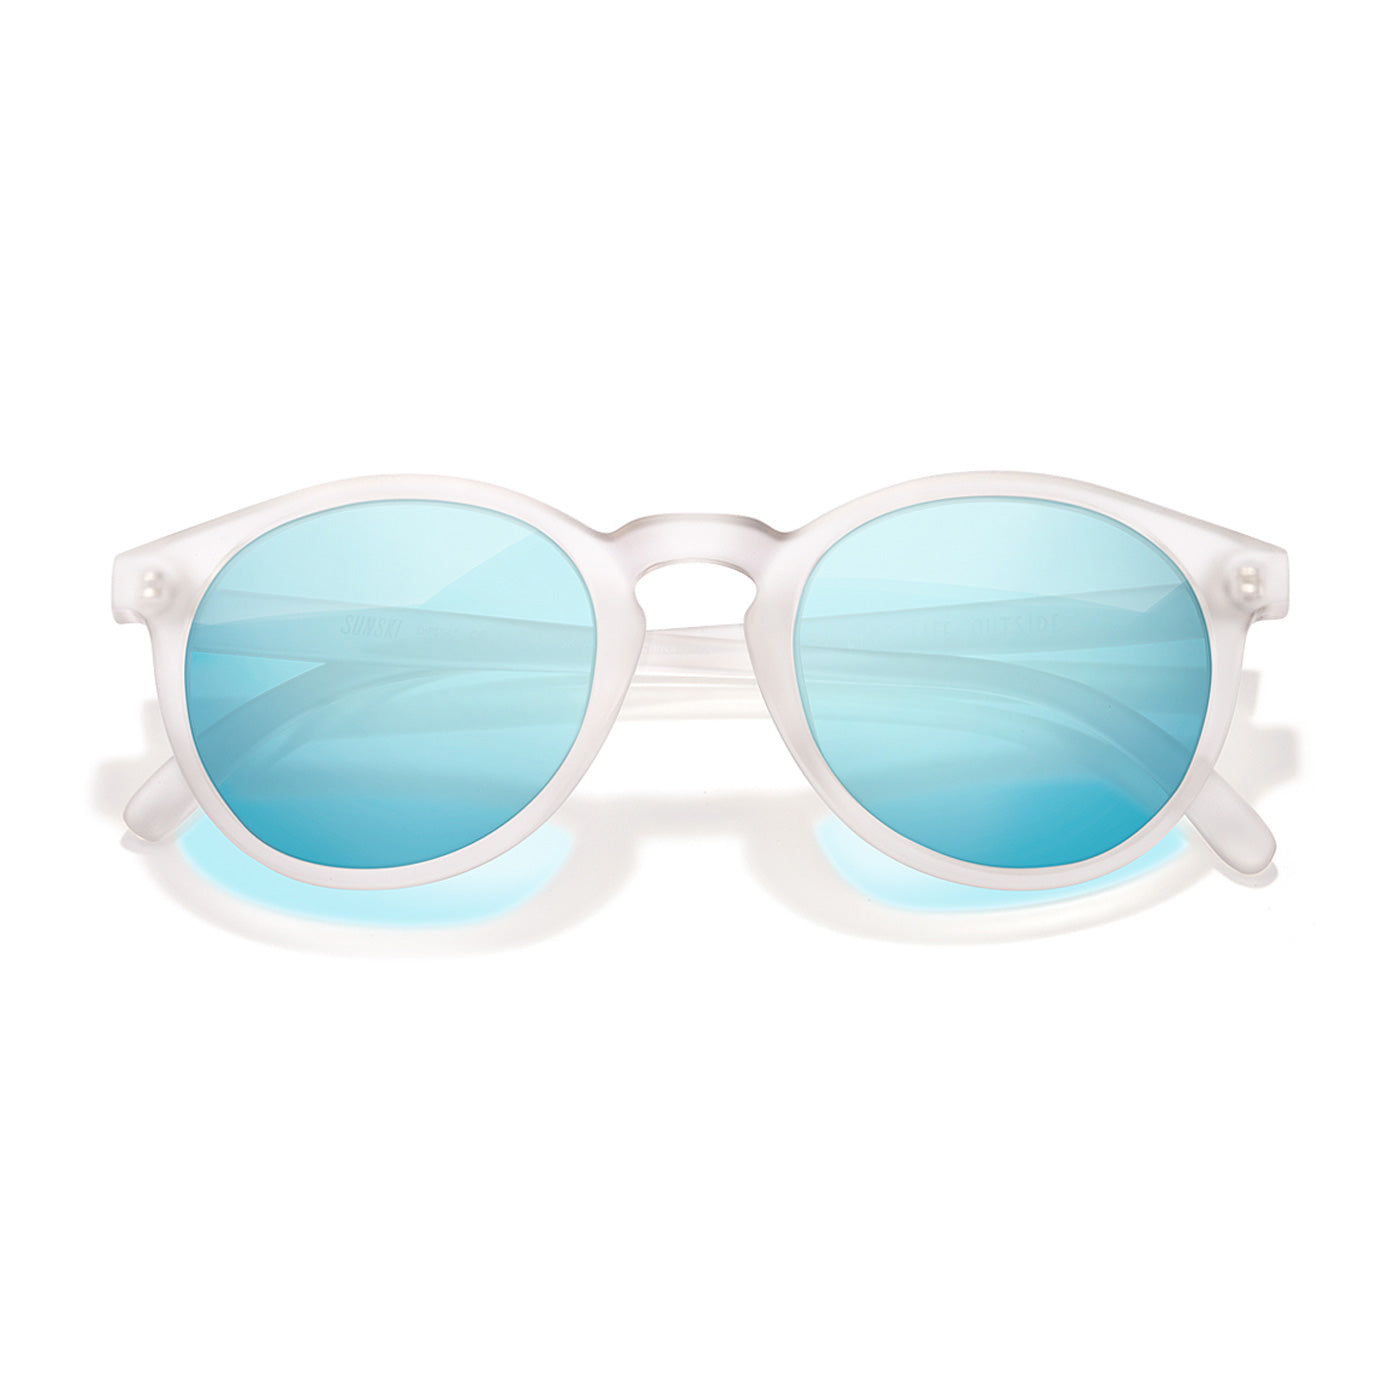 Clear Dipsea sunglasses by Sunski